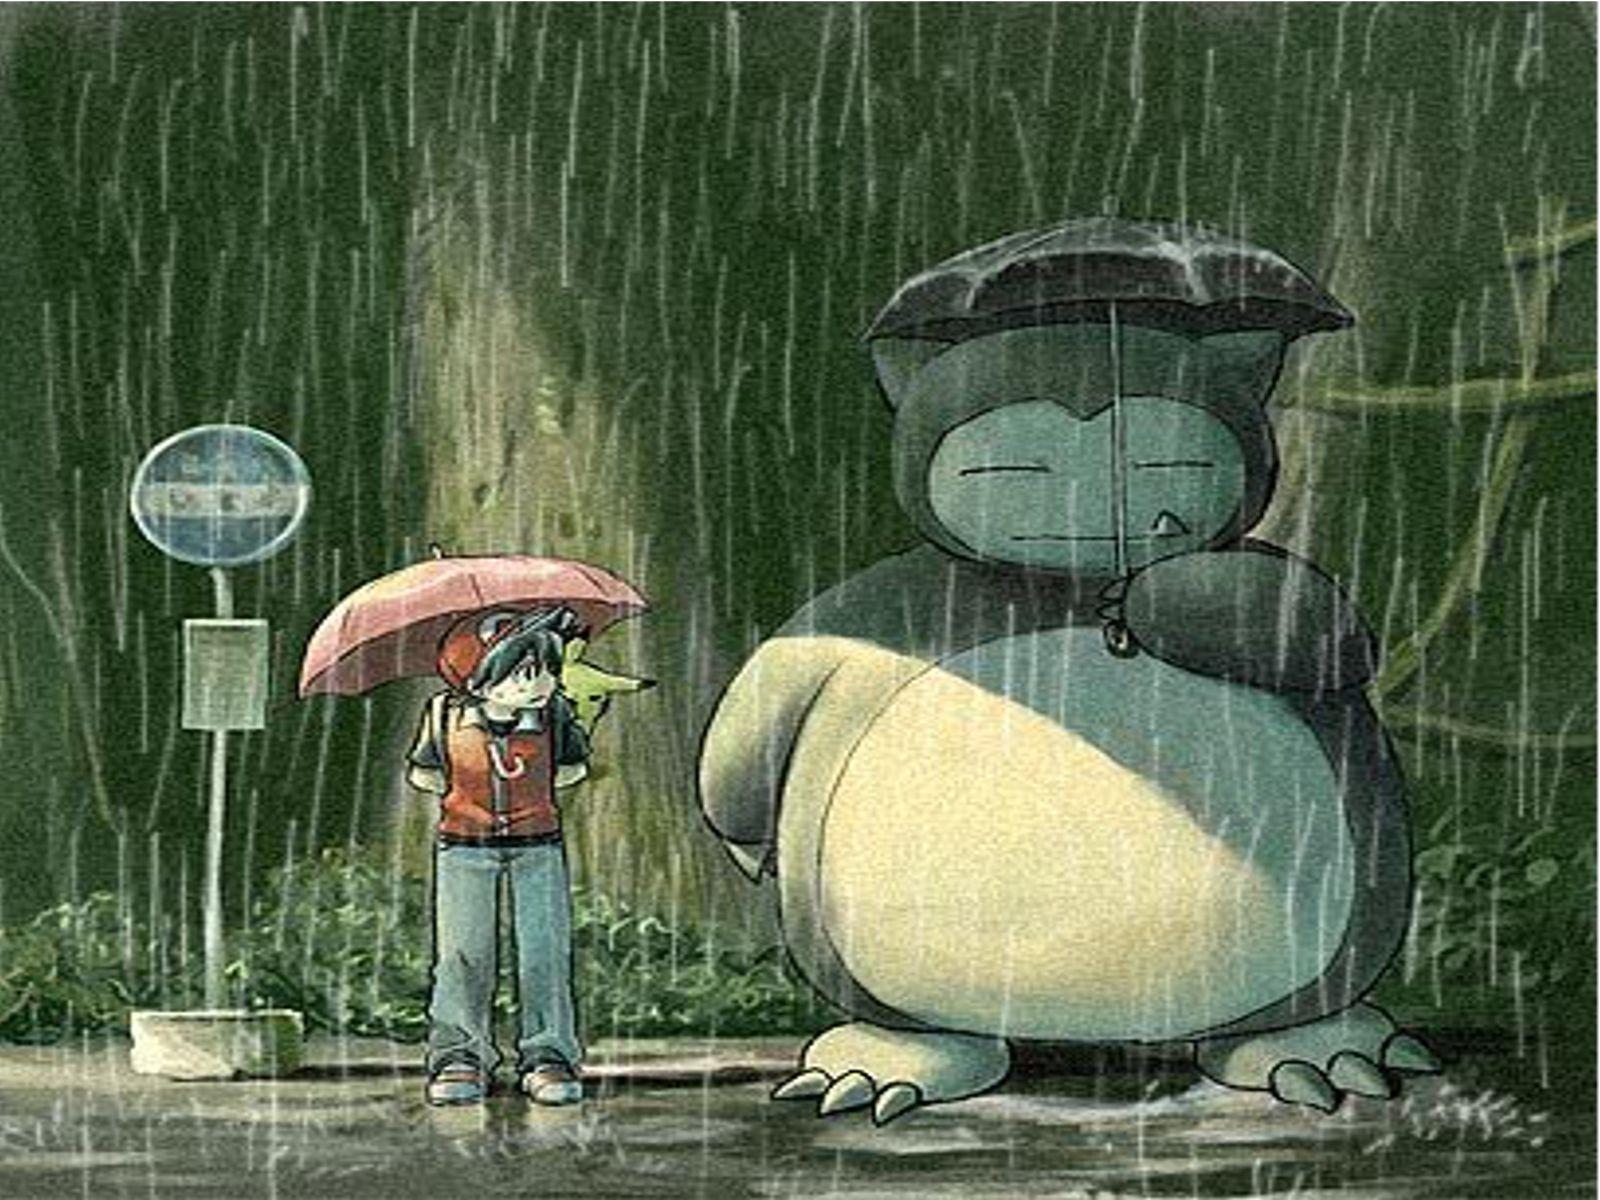 pokemon, rain, Totoro, parody, Snorlax, bus stop, umbrellas